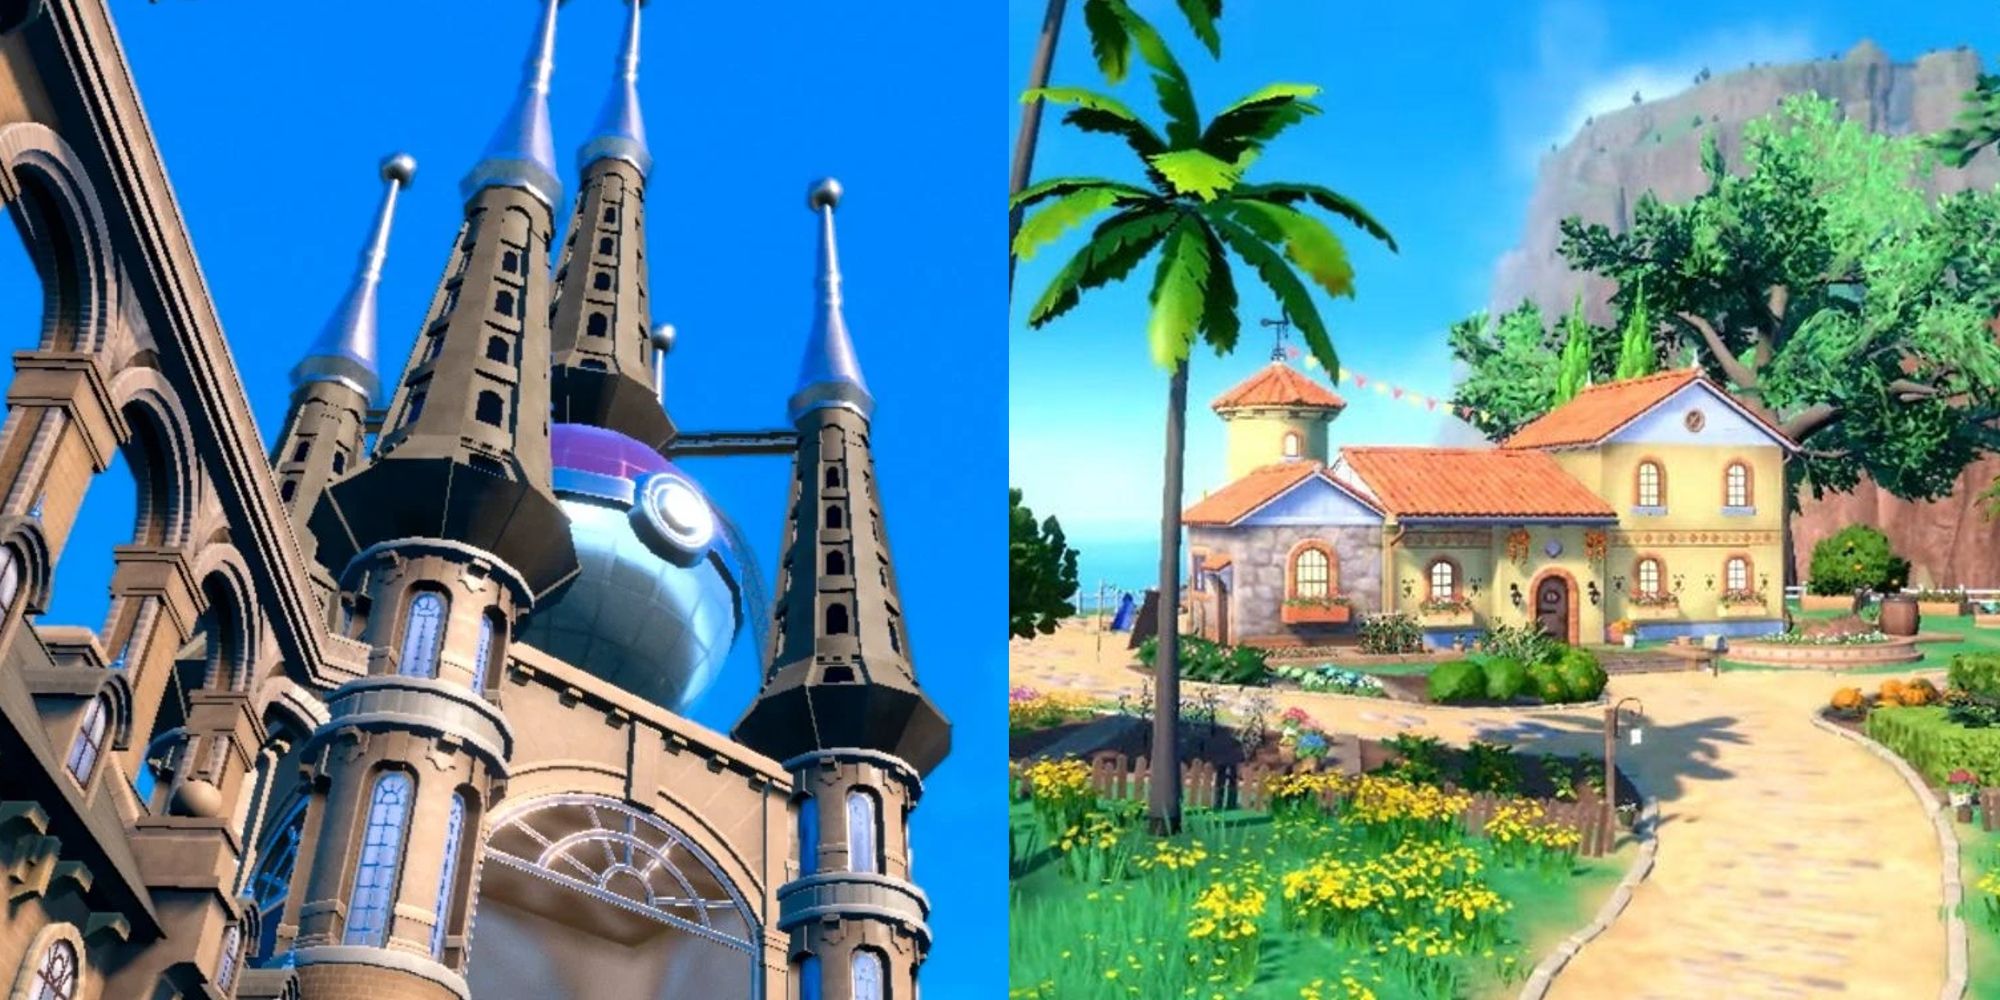 A castle area in the new Pokemon region; the player's starting home in the new Pokemon region